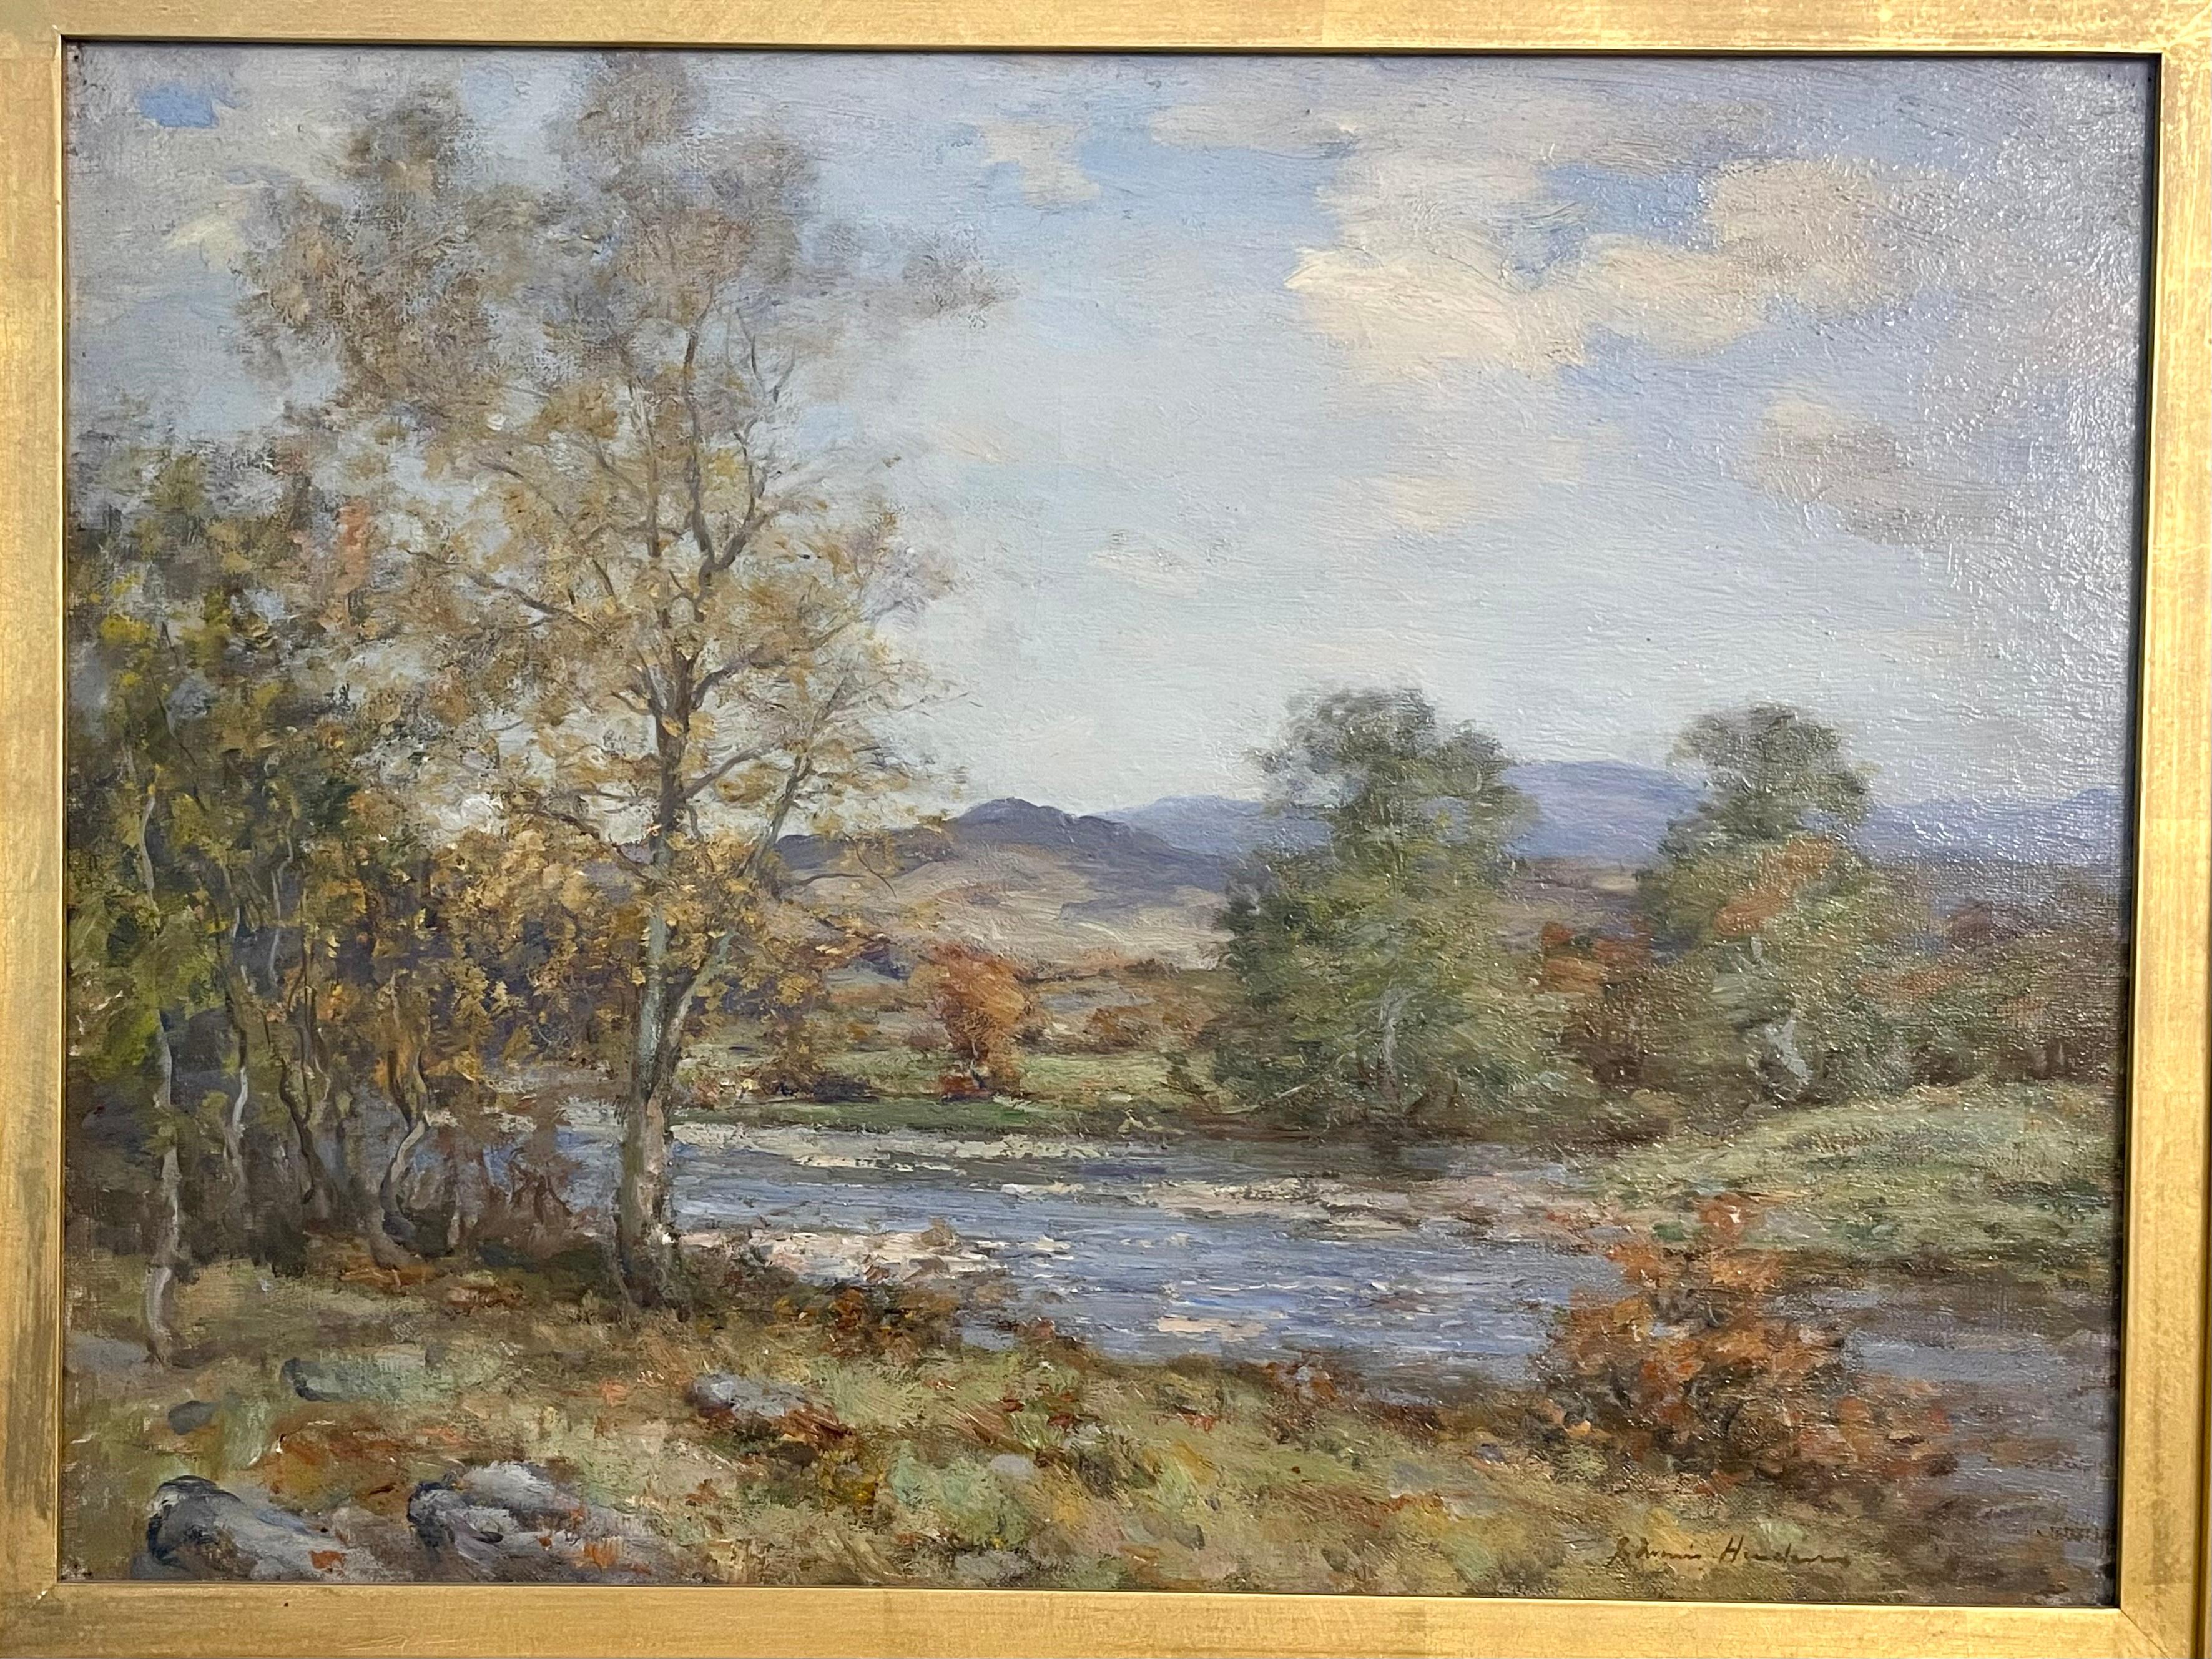 Landscape Painting Joseph Morris Henderson - The River in October, Scotland circa 1900